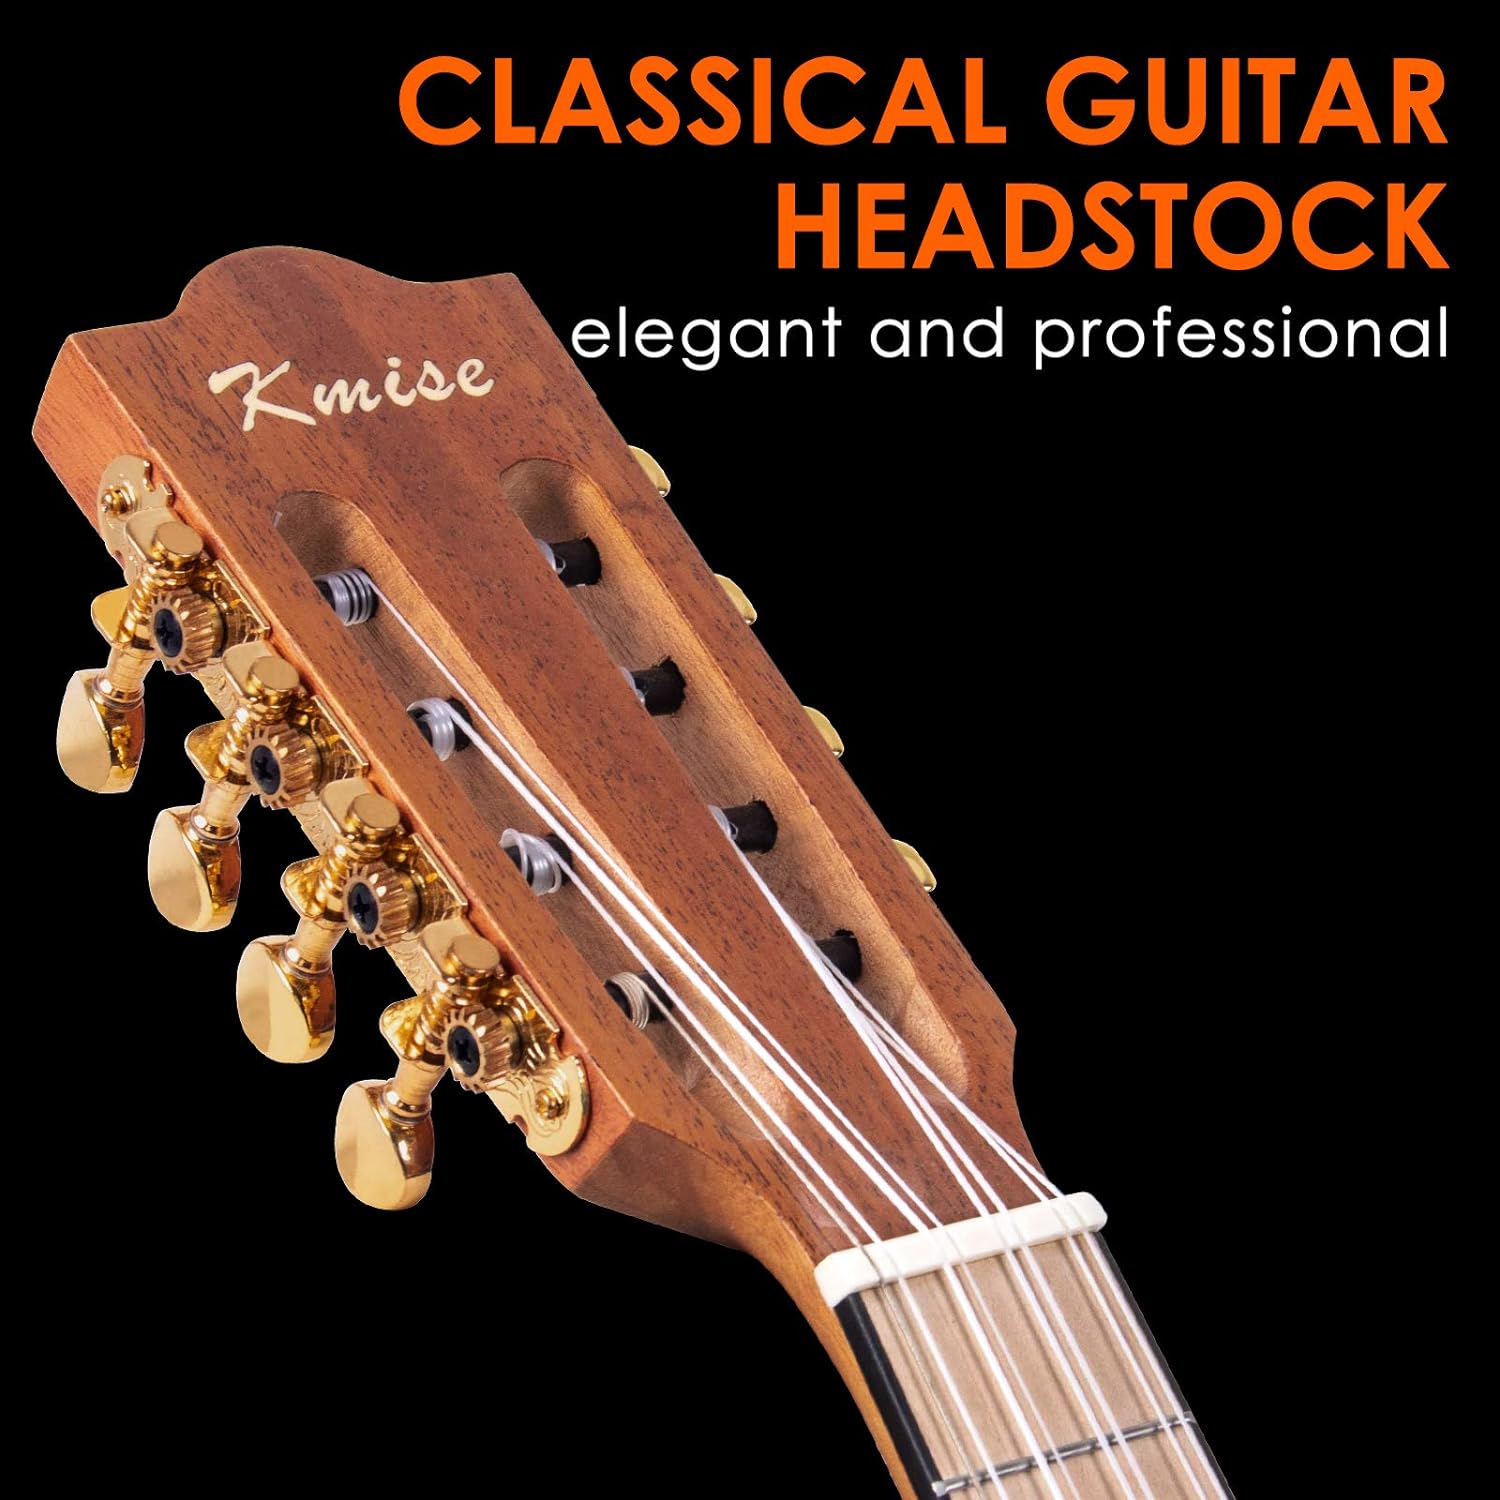 Kmise Guitalele 31 inch Guitarlele Mini Travel Guitar Ukulele Mahogany with Gig Bag Tuner Picks Strap (8 String Tenor)